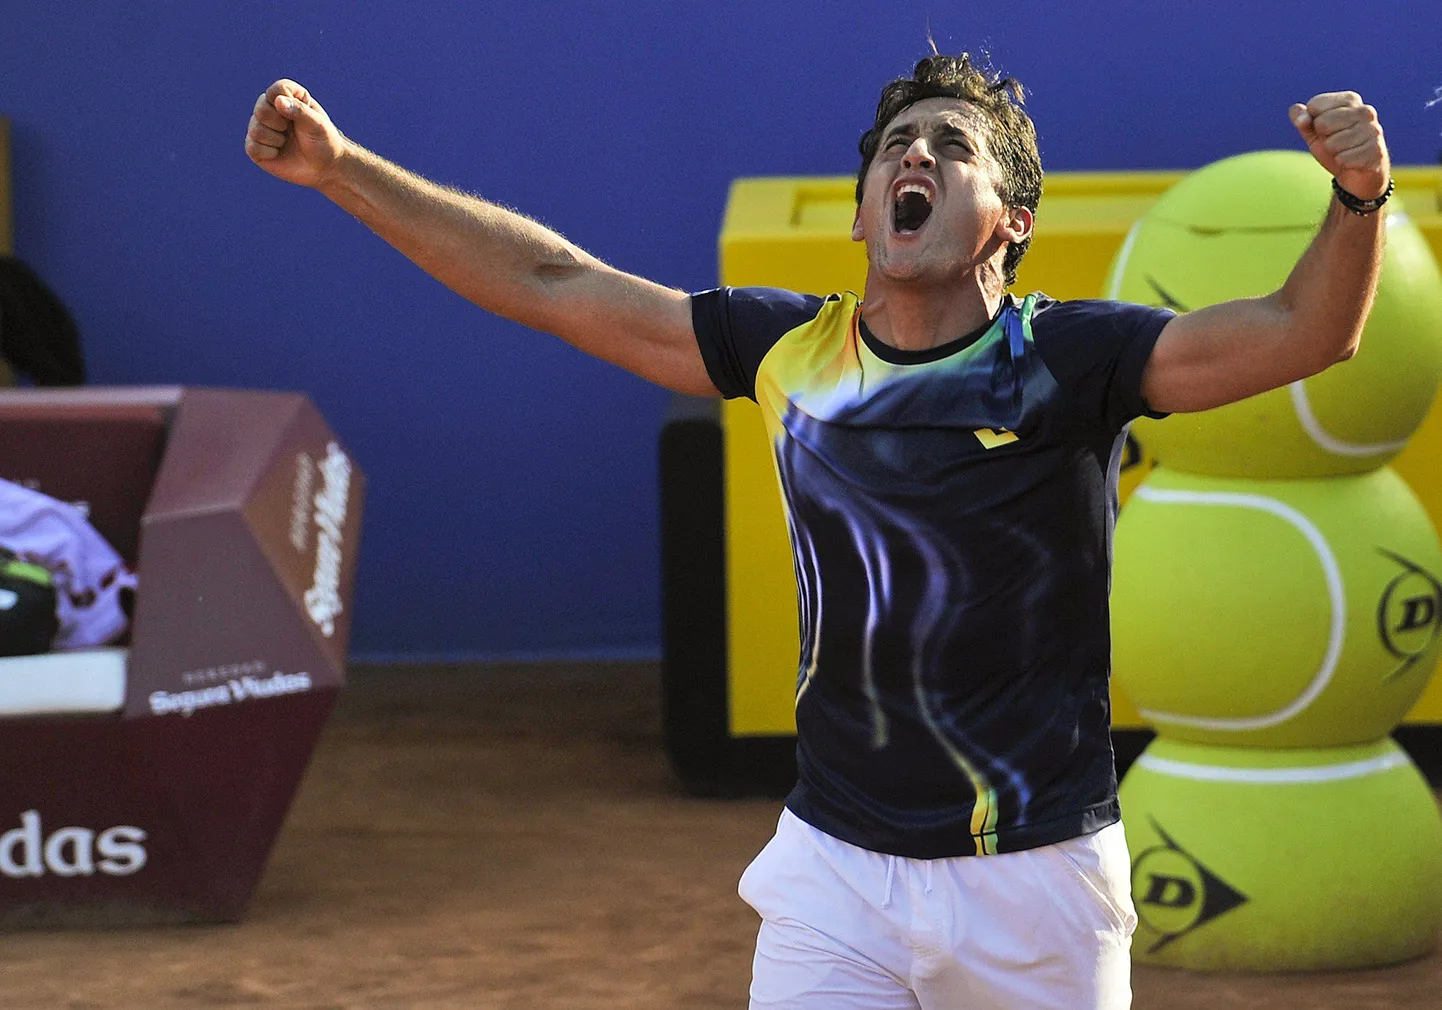 Spanish tennis player Nicolas Almagro celebrates after winning the ATP Barcelona Open "Conde de Godo" tennis match against Spanish tennis player Rafael Nadal in Barcelona on April 25, 2014. Almagro won the match 2-6, 7-6 (7/5), 6-4.  AFP PHOTO / JOSEP LAGO